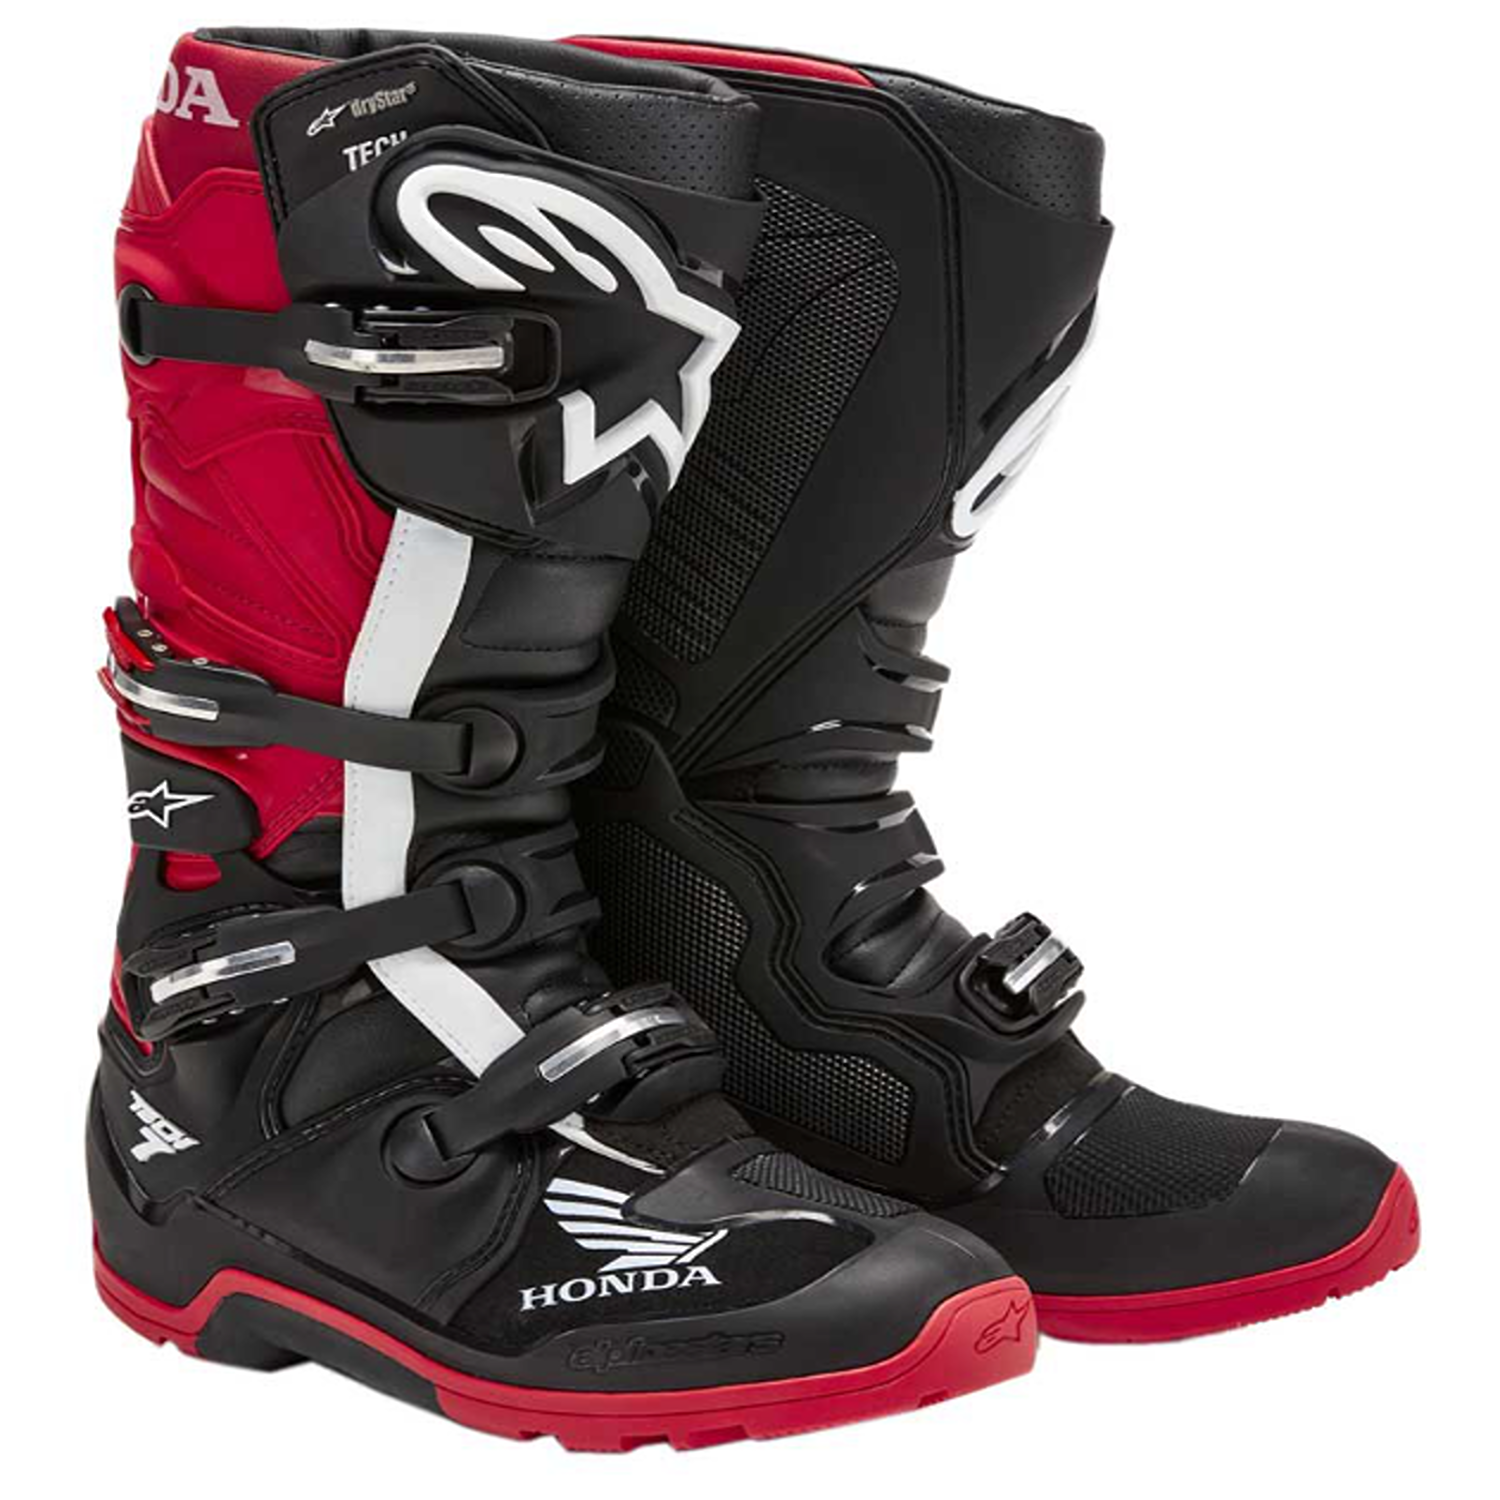 Image of Alpinestars Honda Tech 7 Enduro Drystar Boots Black Bright Red Size US 5 ID 8059347155470